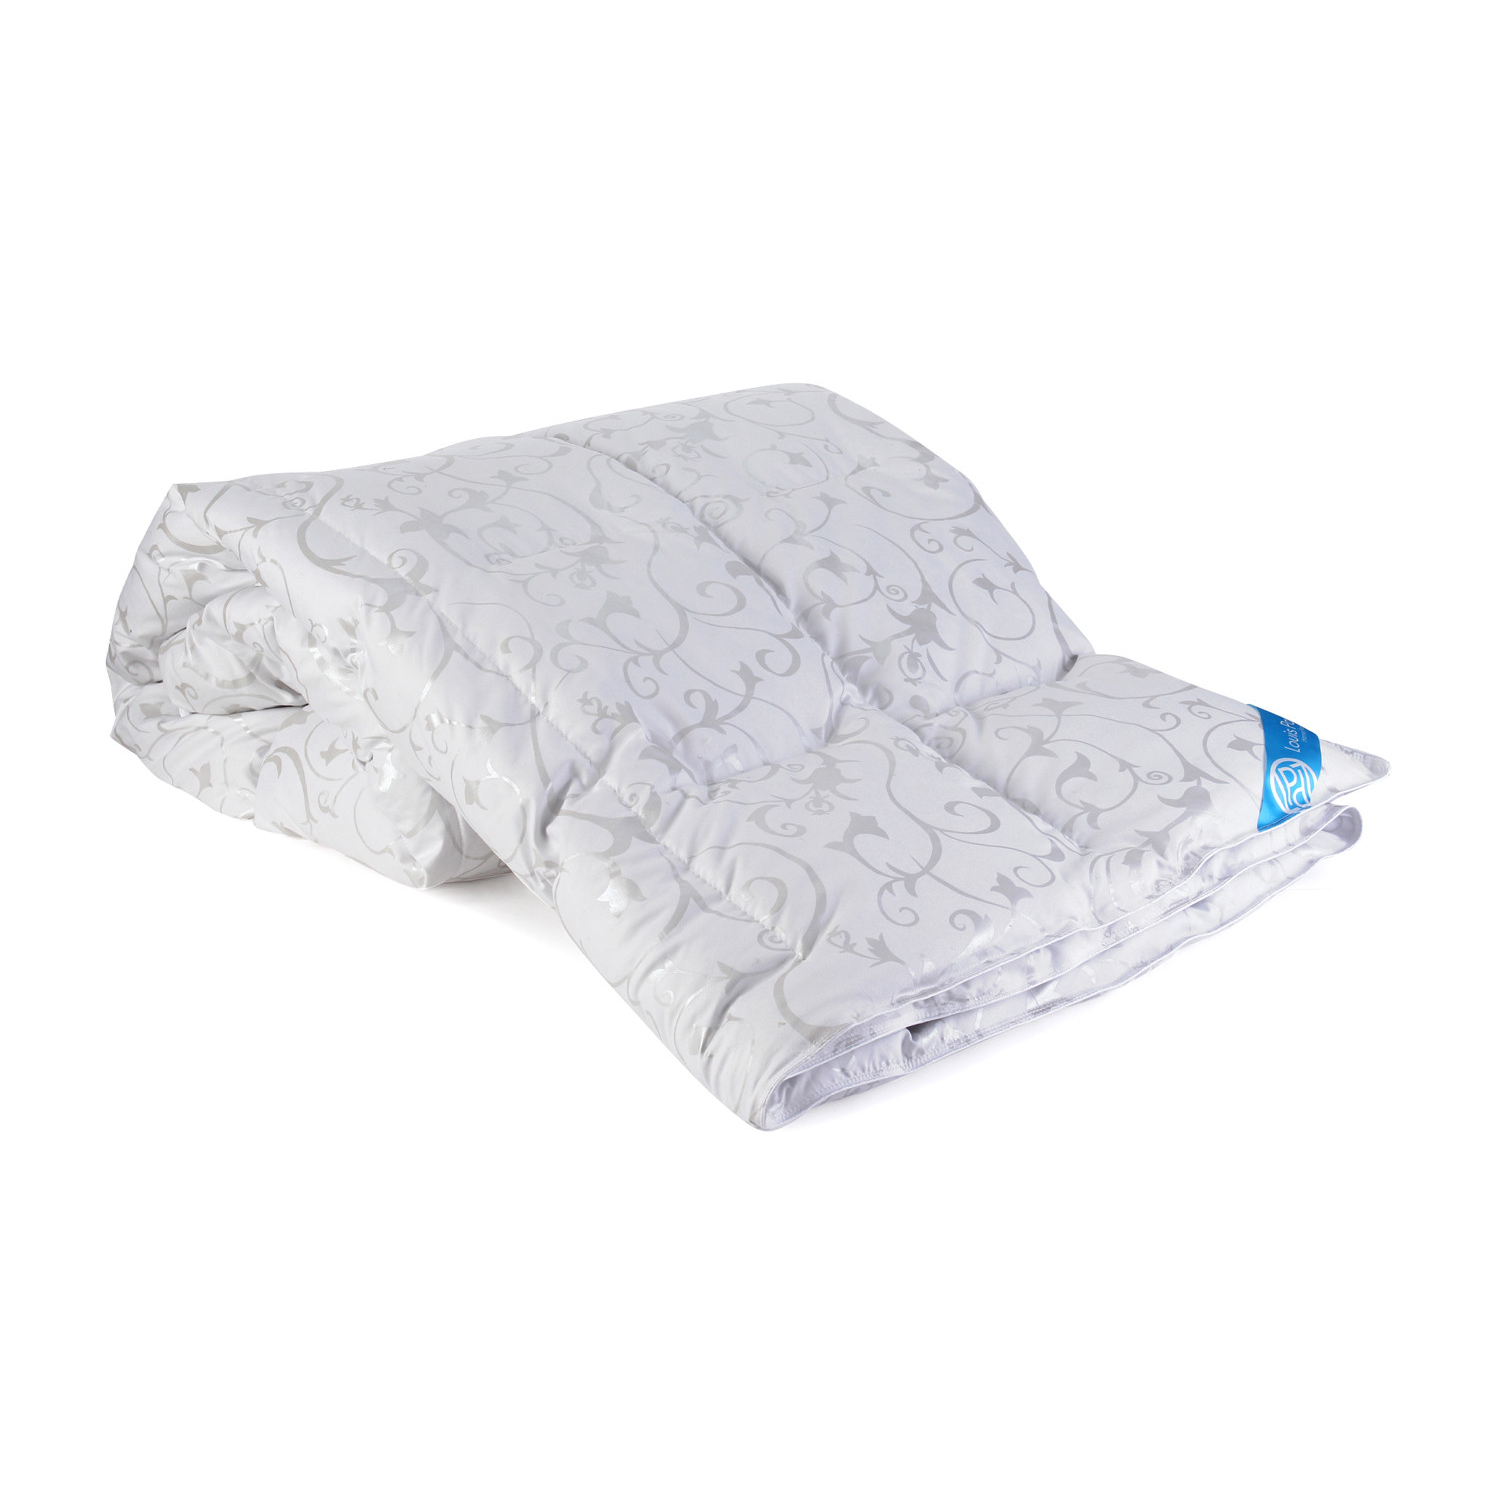 Пуховое одеяло Louis Pascal Эмма белое с серым 140х205 см (ЛП2066) пуховое одеяло louis pascal николь бежевое 140х205 см лп2022